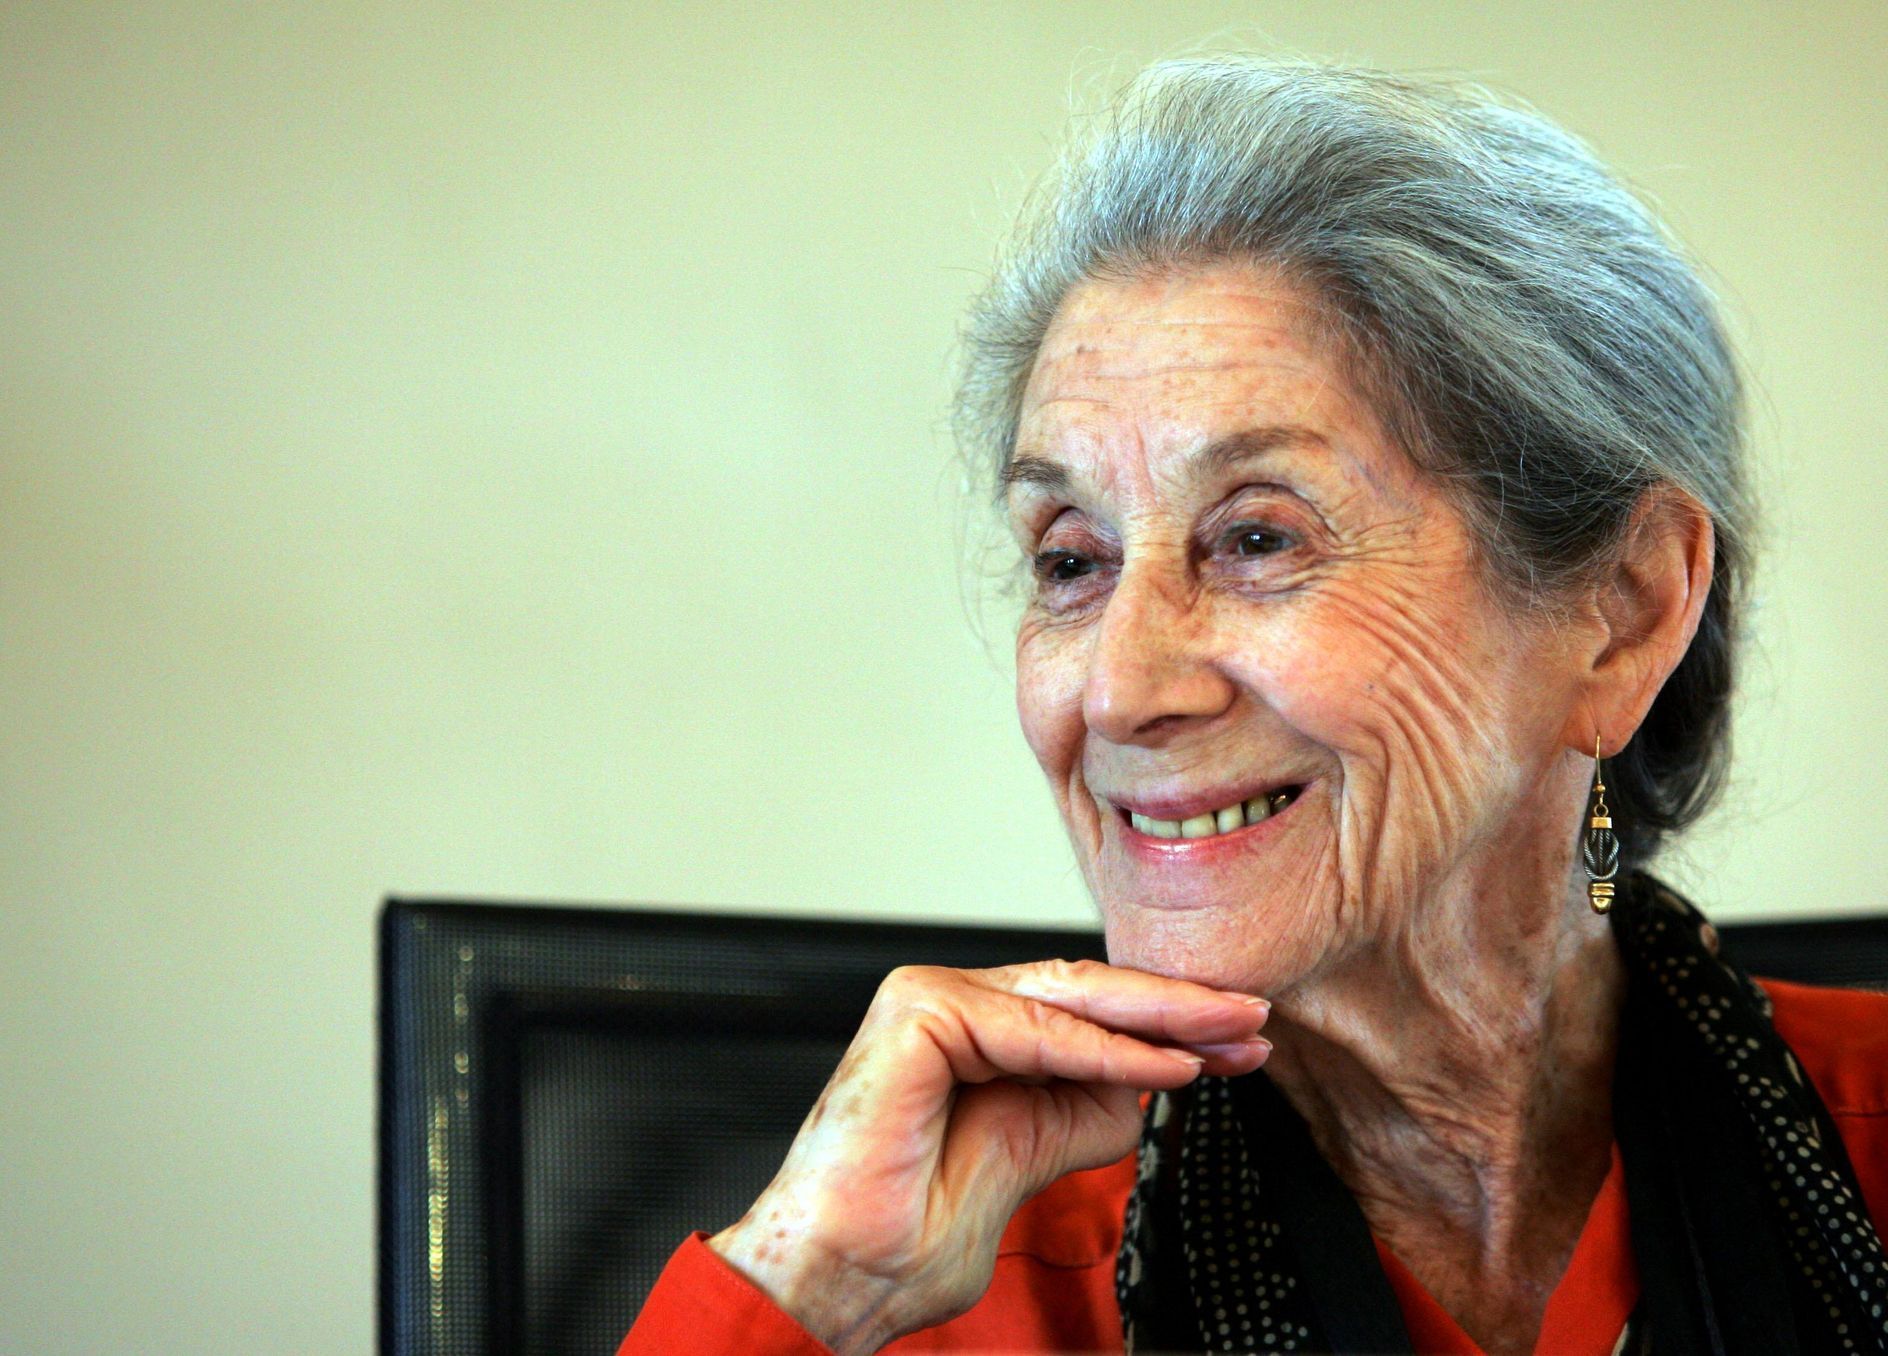 Nobel Prize for literature laureate Nadine Gordimer attends a memorial for